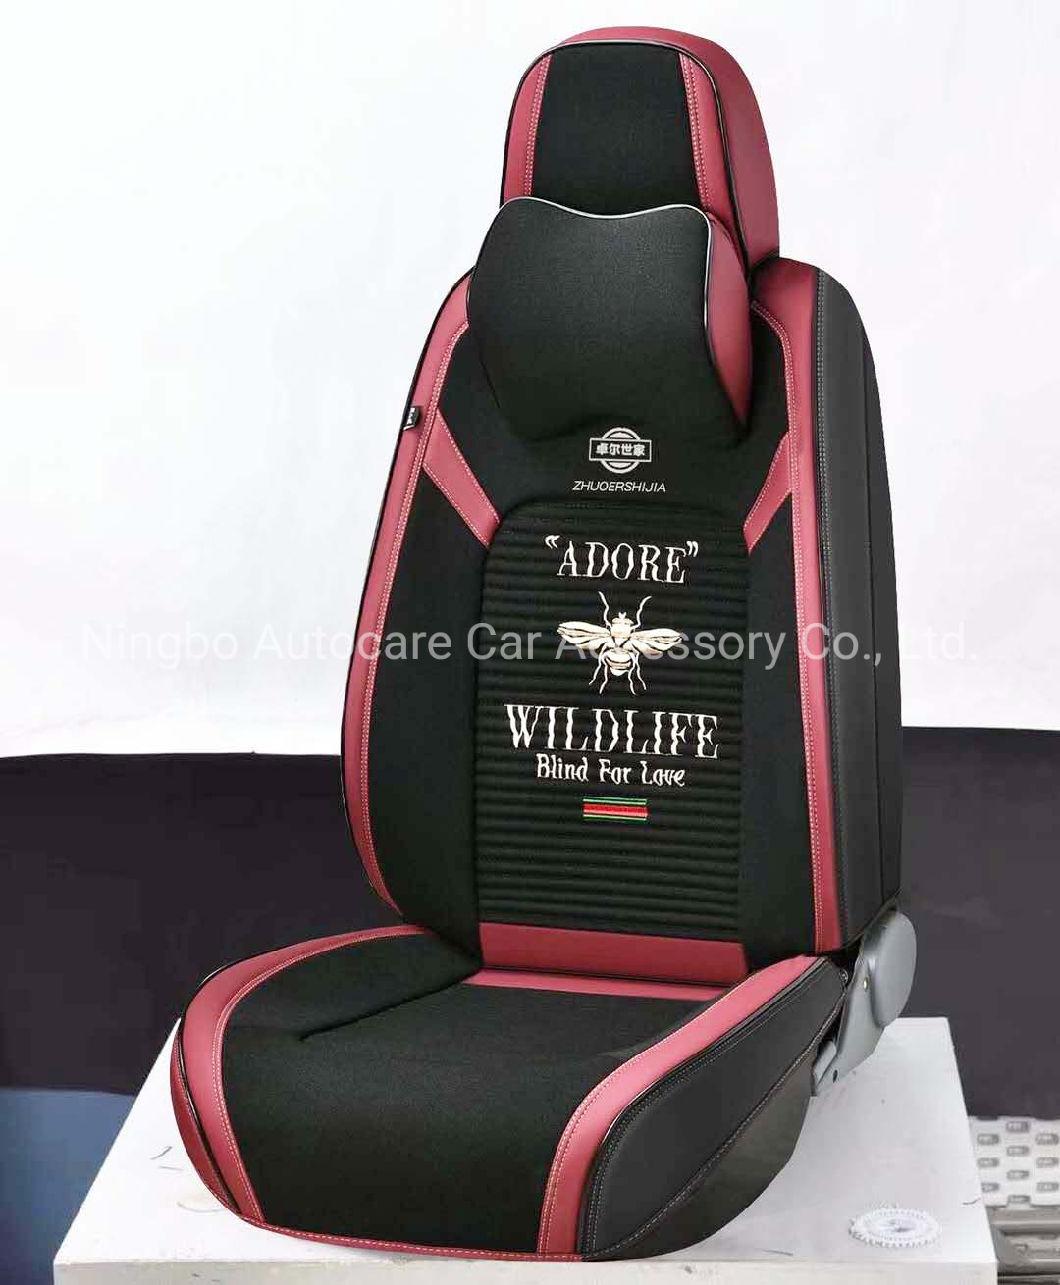 Car Accessories Car Decoration Car Seat Cushion Universal New Fashion PVC Leather Auto Car Seat Cover